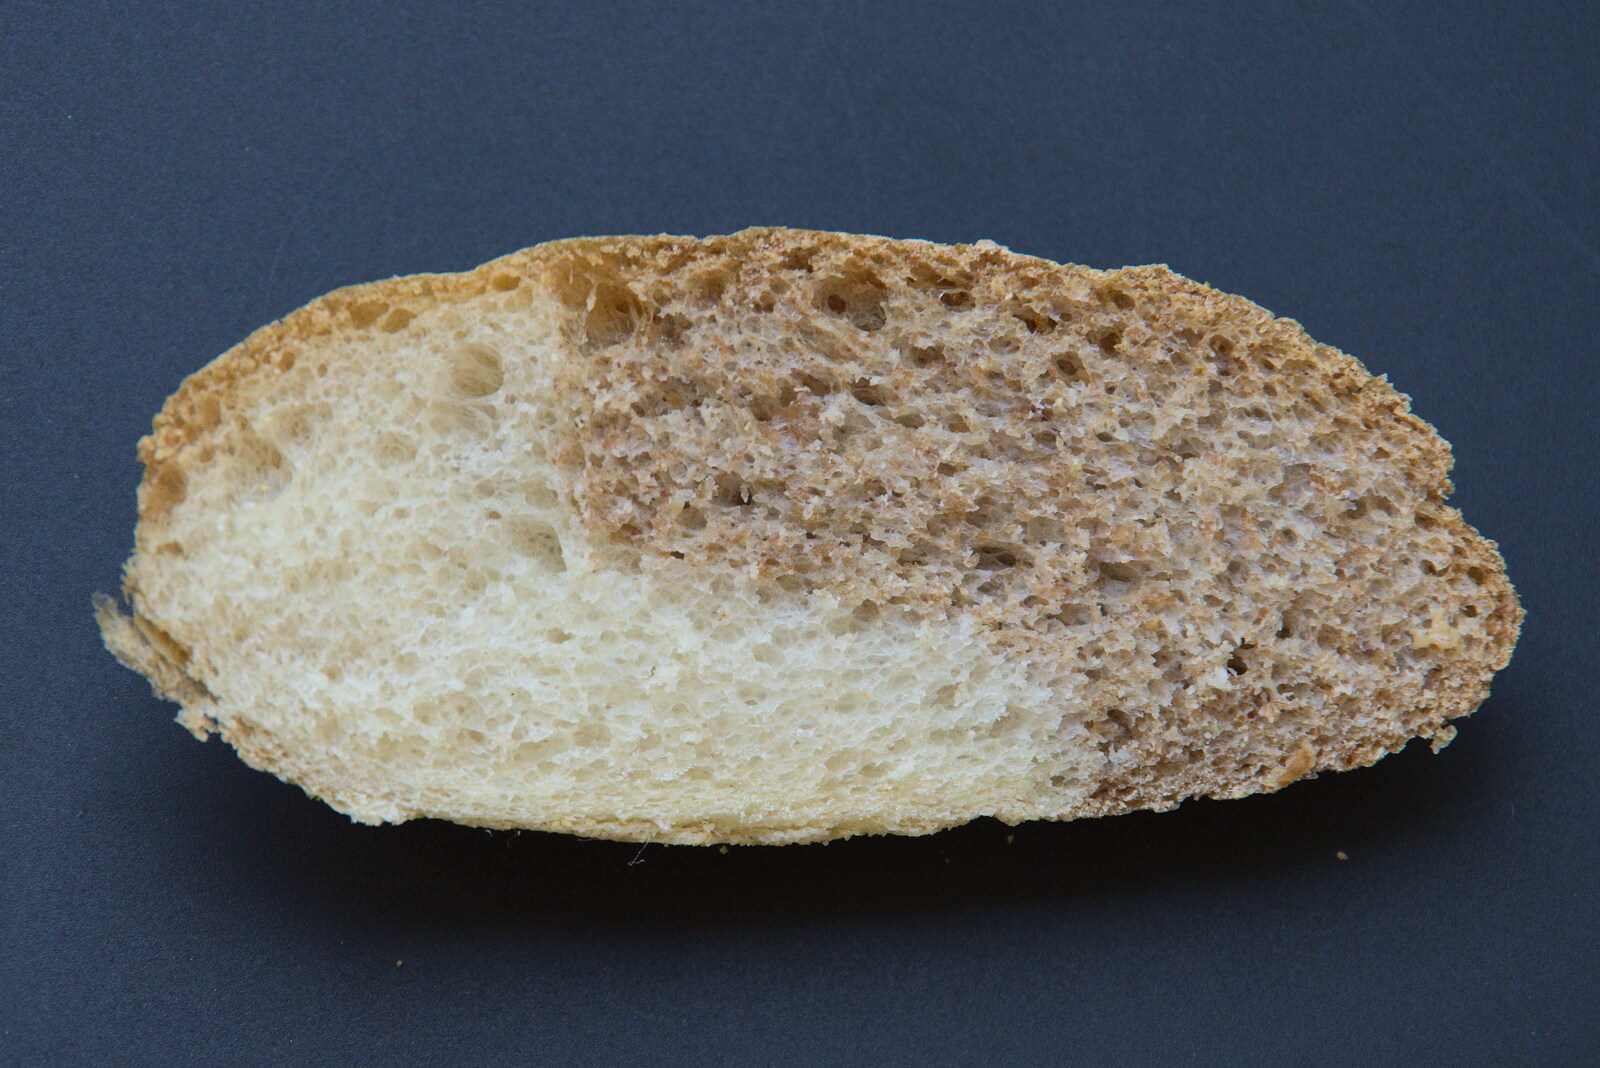 Home-made Yin-Yang 'hybrid' bread from A Trip to the Blue Shop, Church Street, Eye, Suffolk - 2nd February 2021